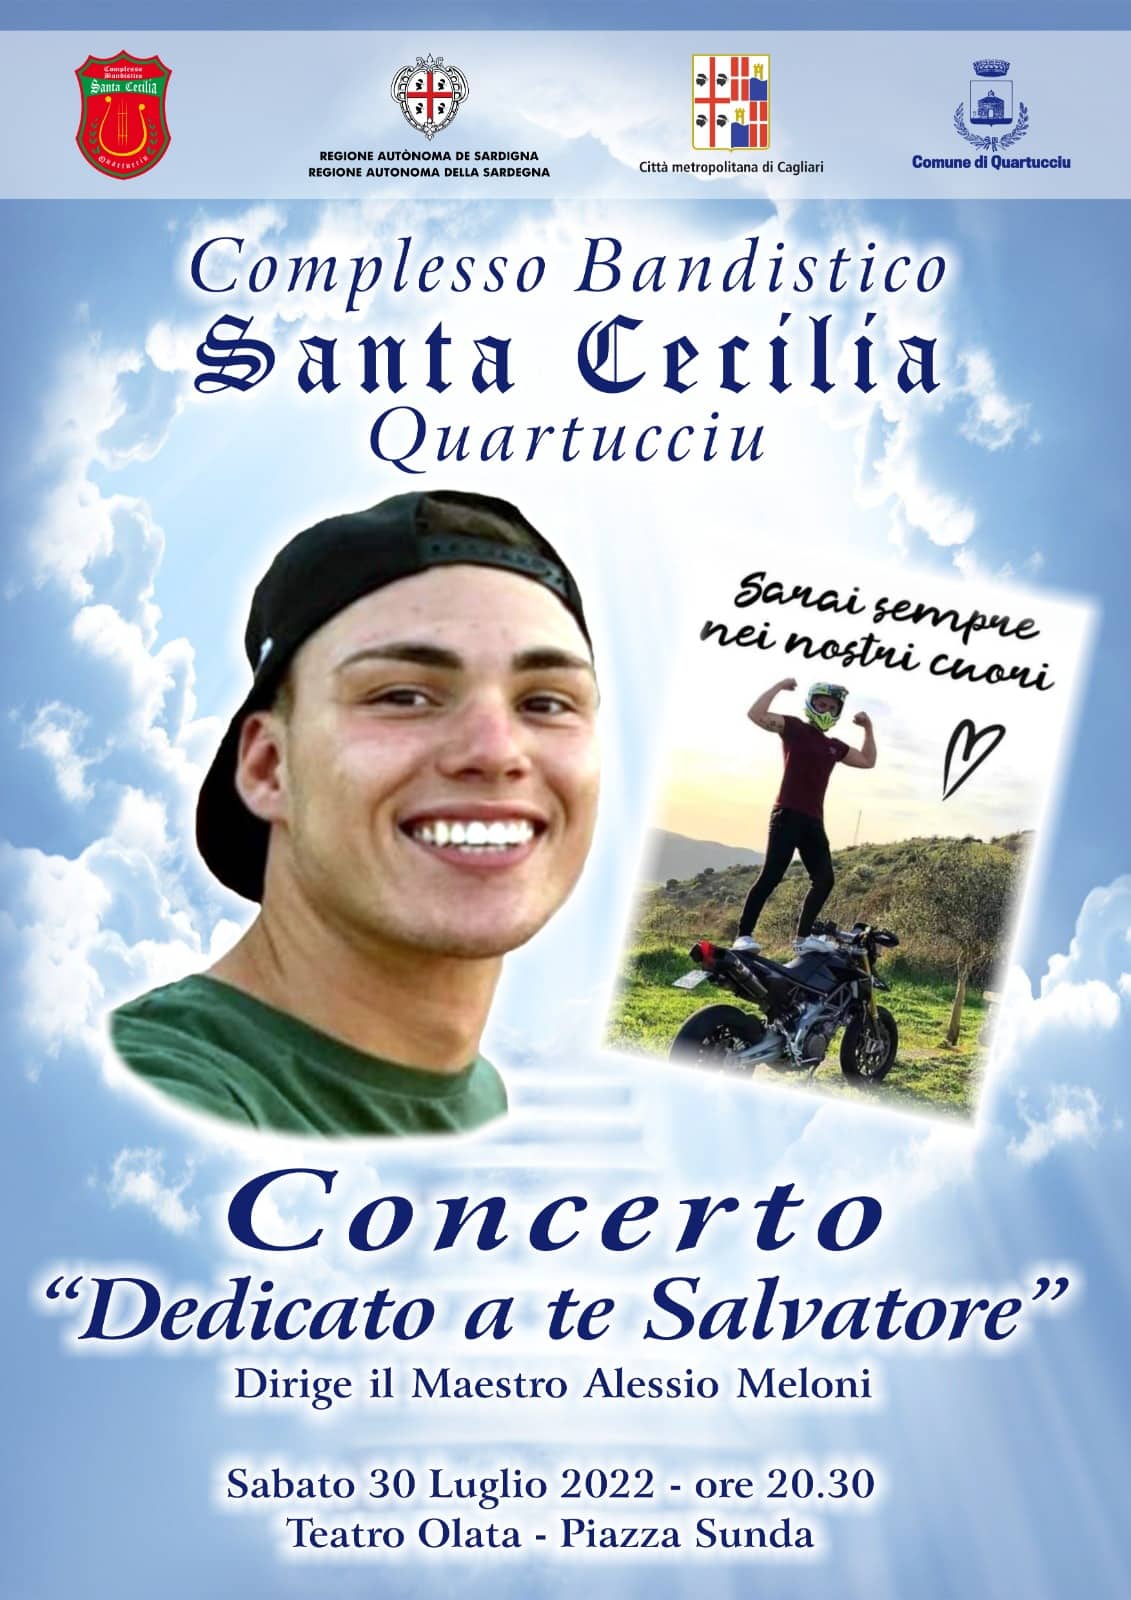 Concerto "Dedicato a Te" - Banda Santa Cecilia Quartucciu